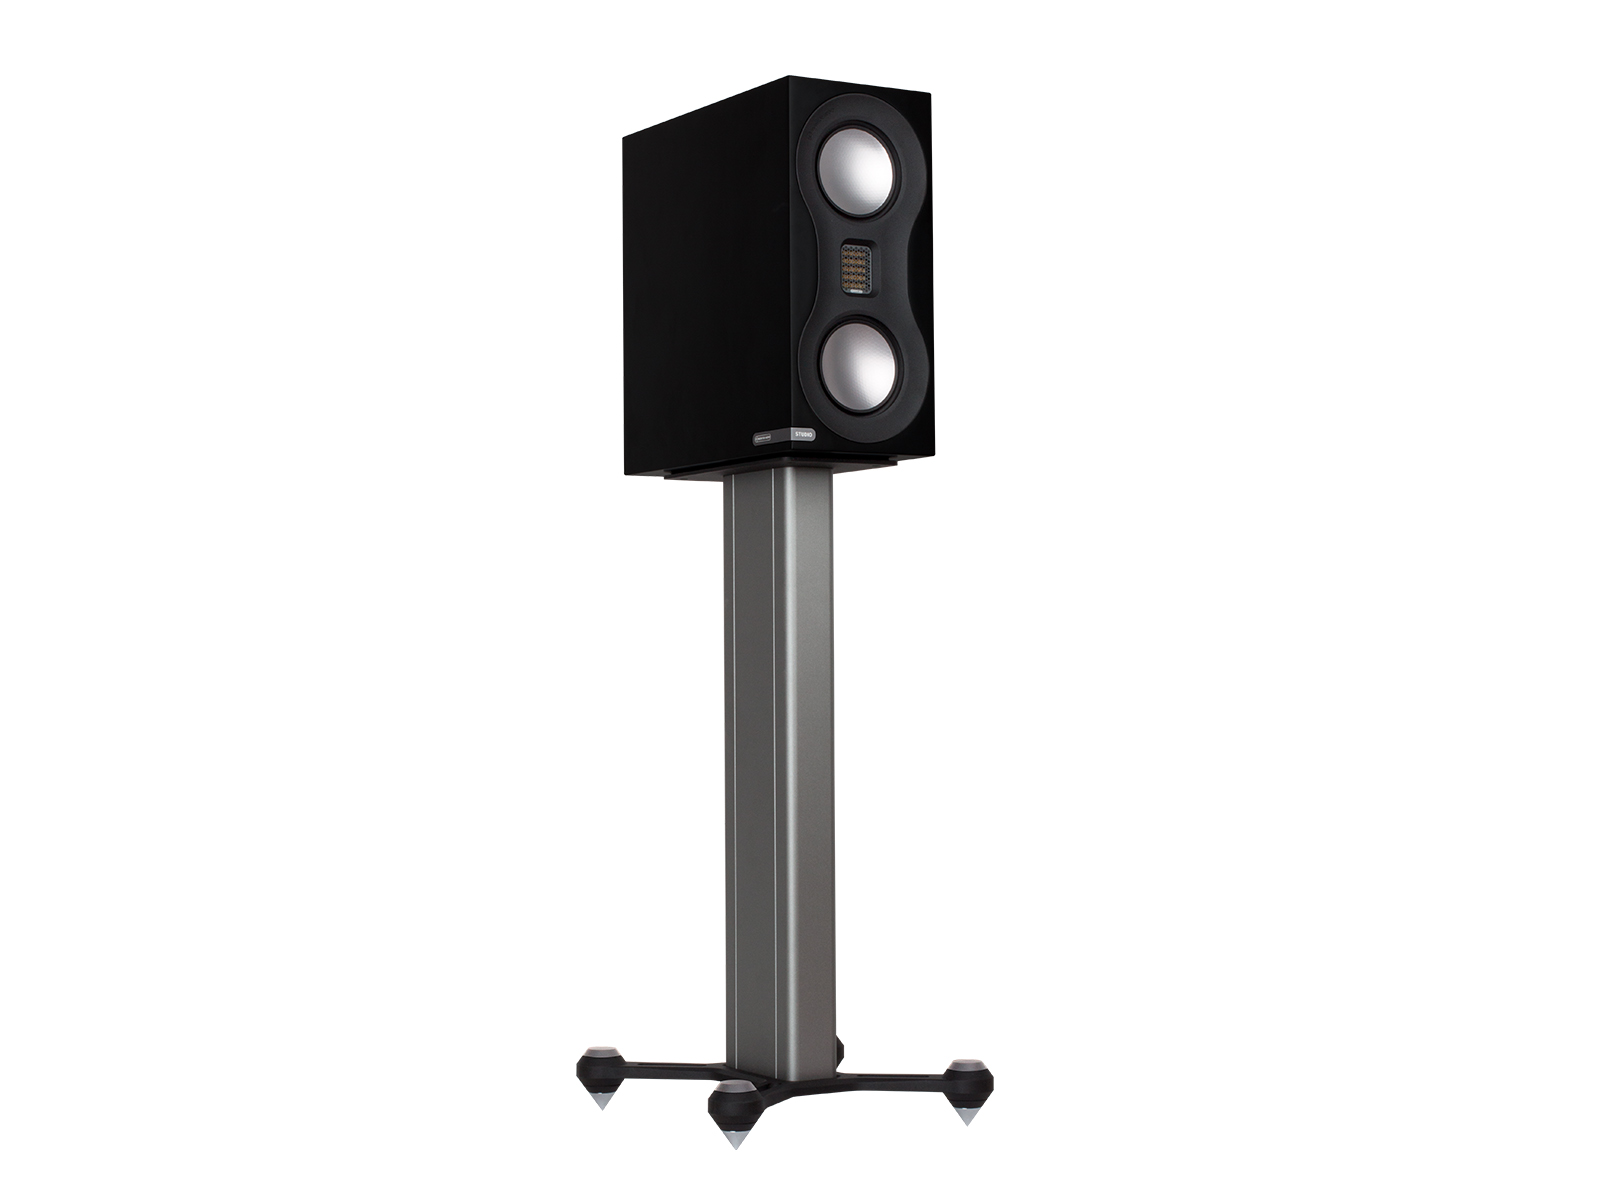 Speaker STAND, grey finish with a black Studio speaker.